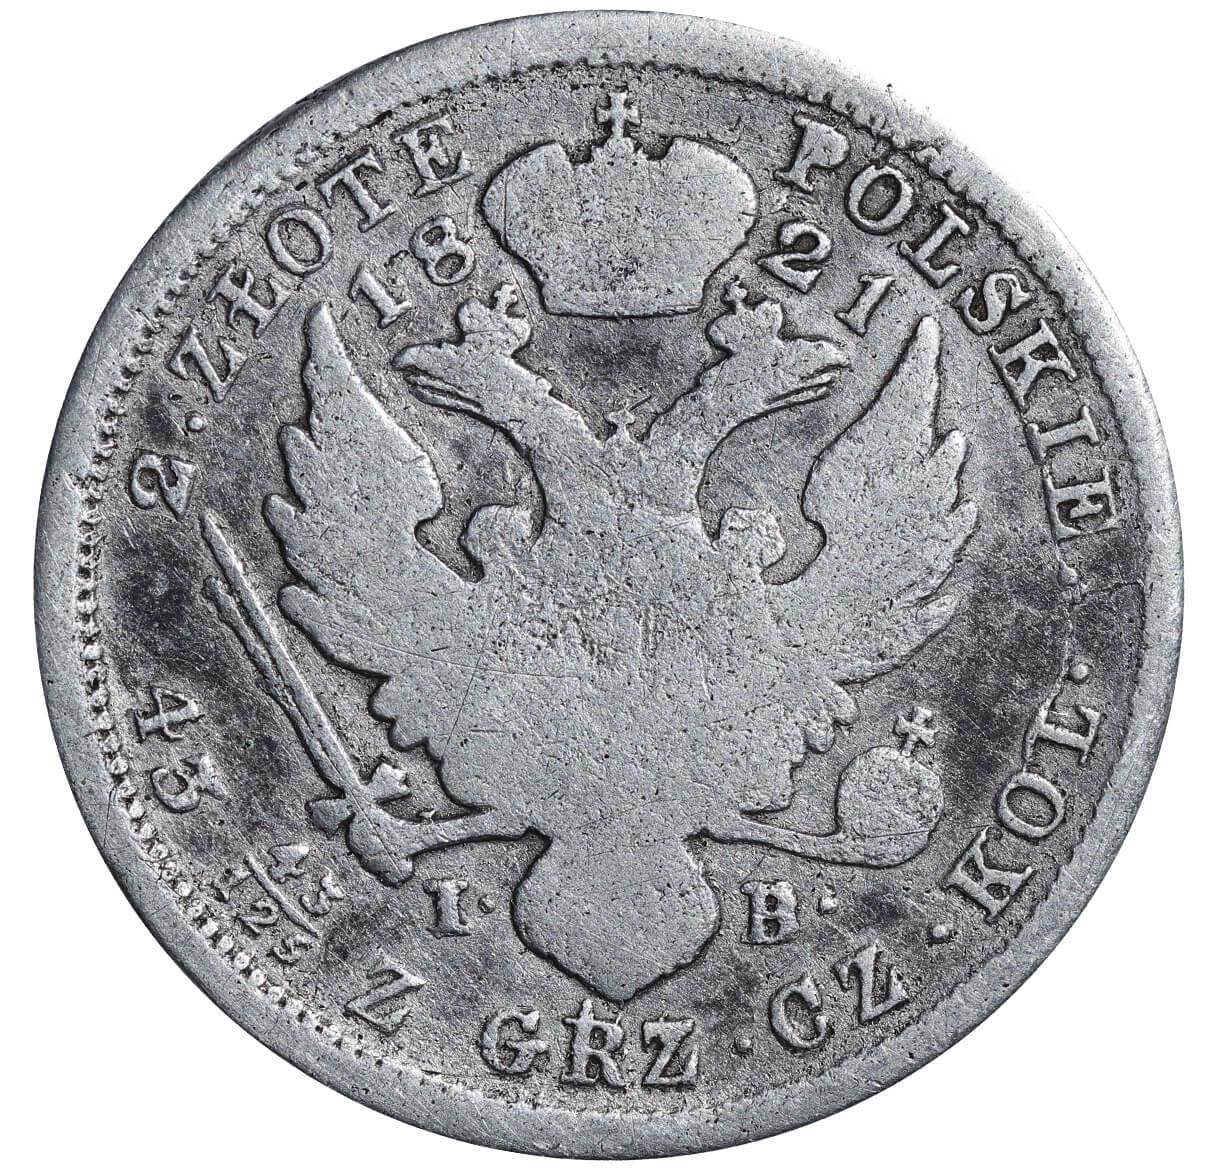 Russian Empire, Poland, 2 Zlotys, 1821 year, IB - Image 3 of 3